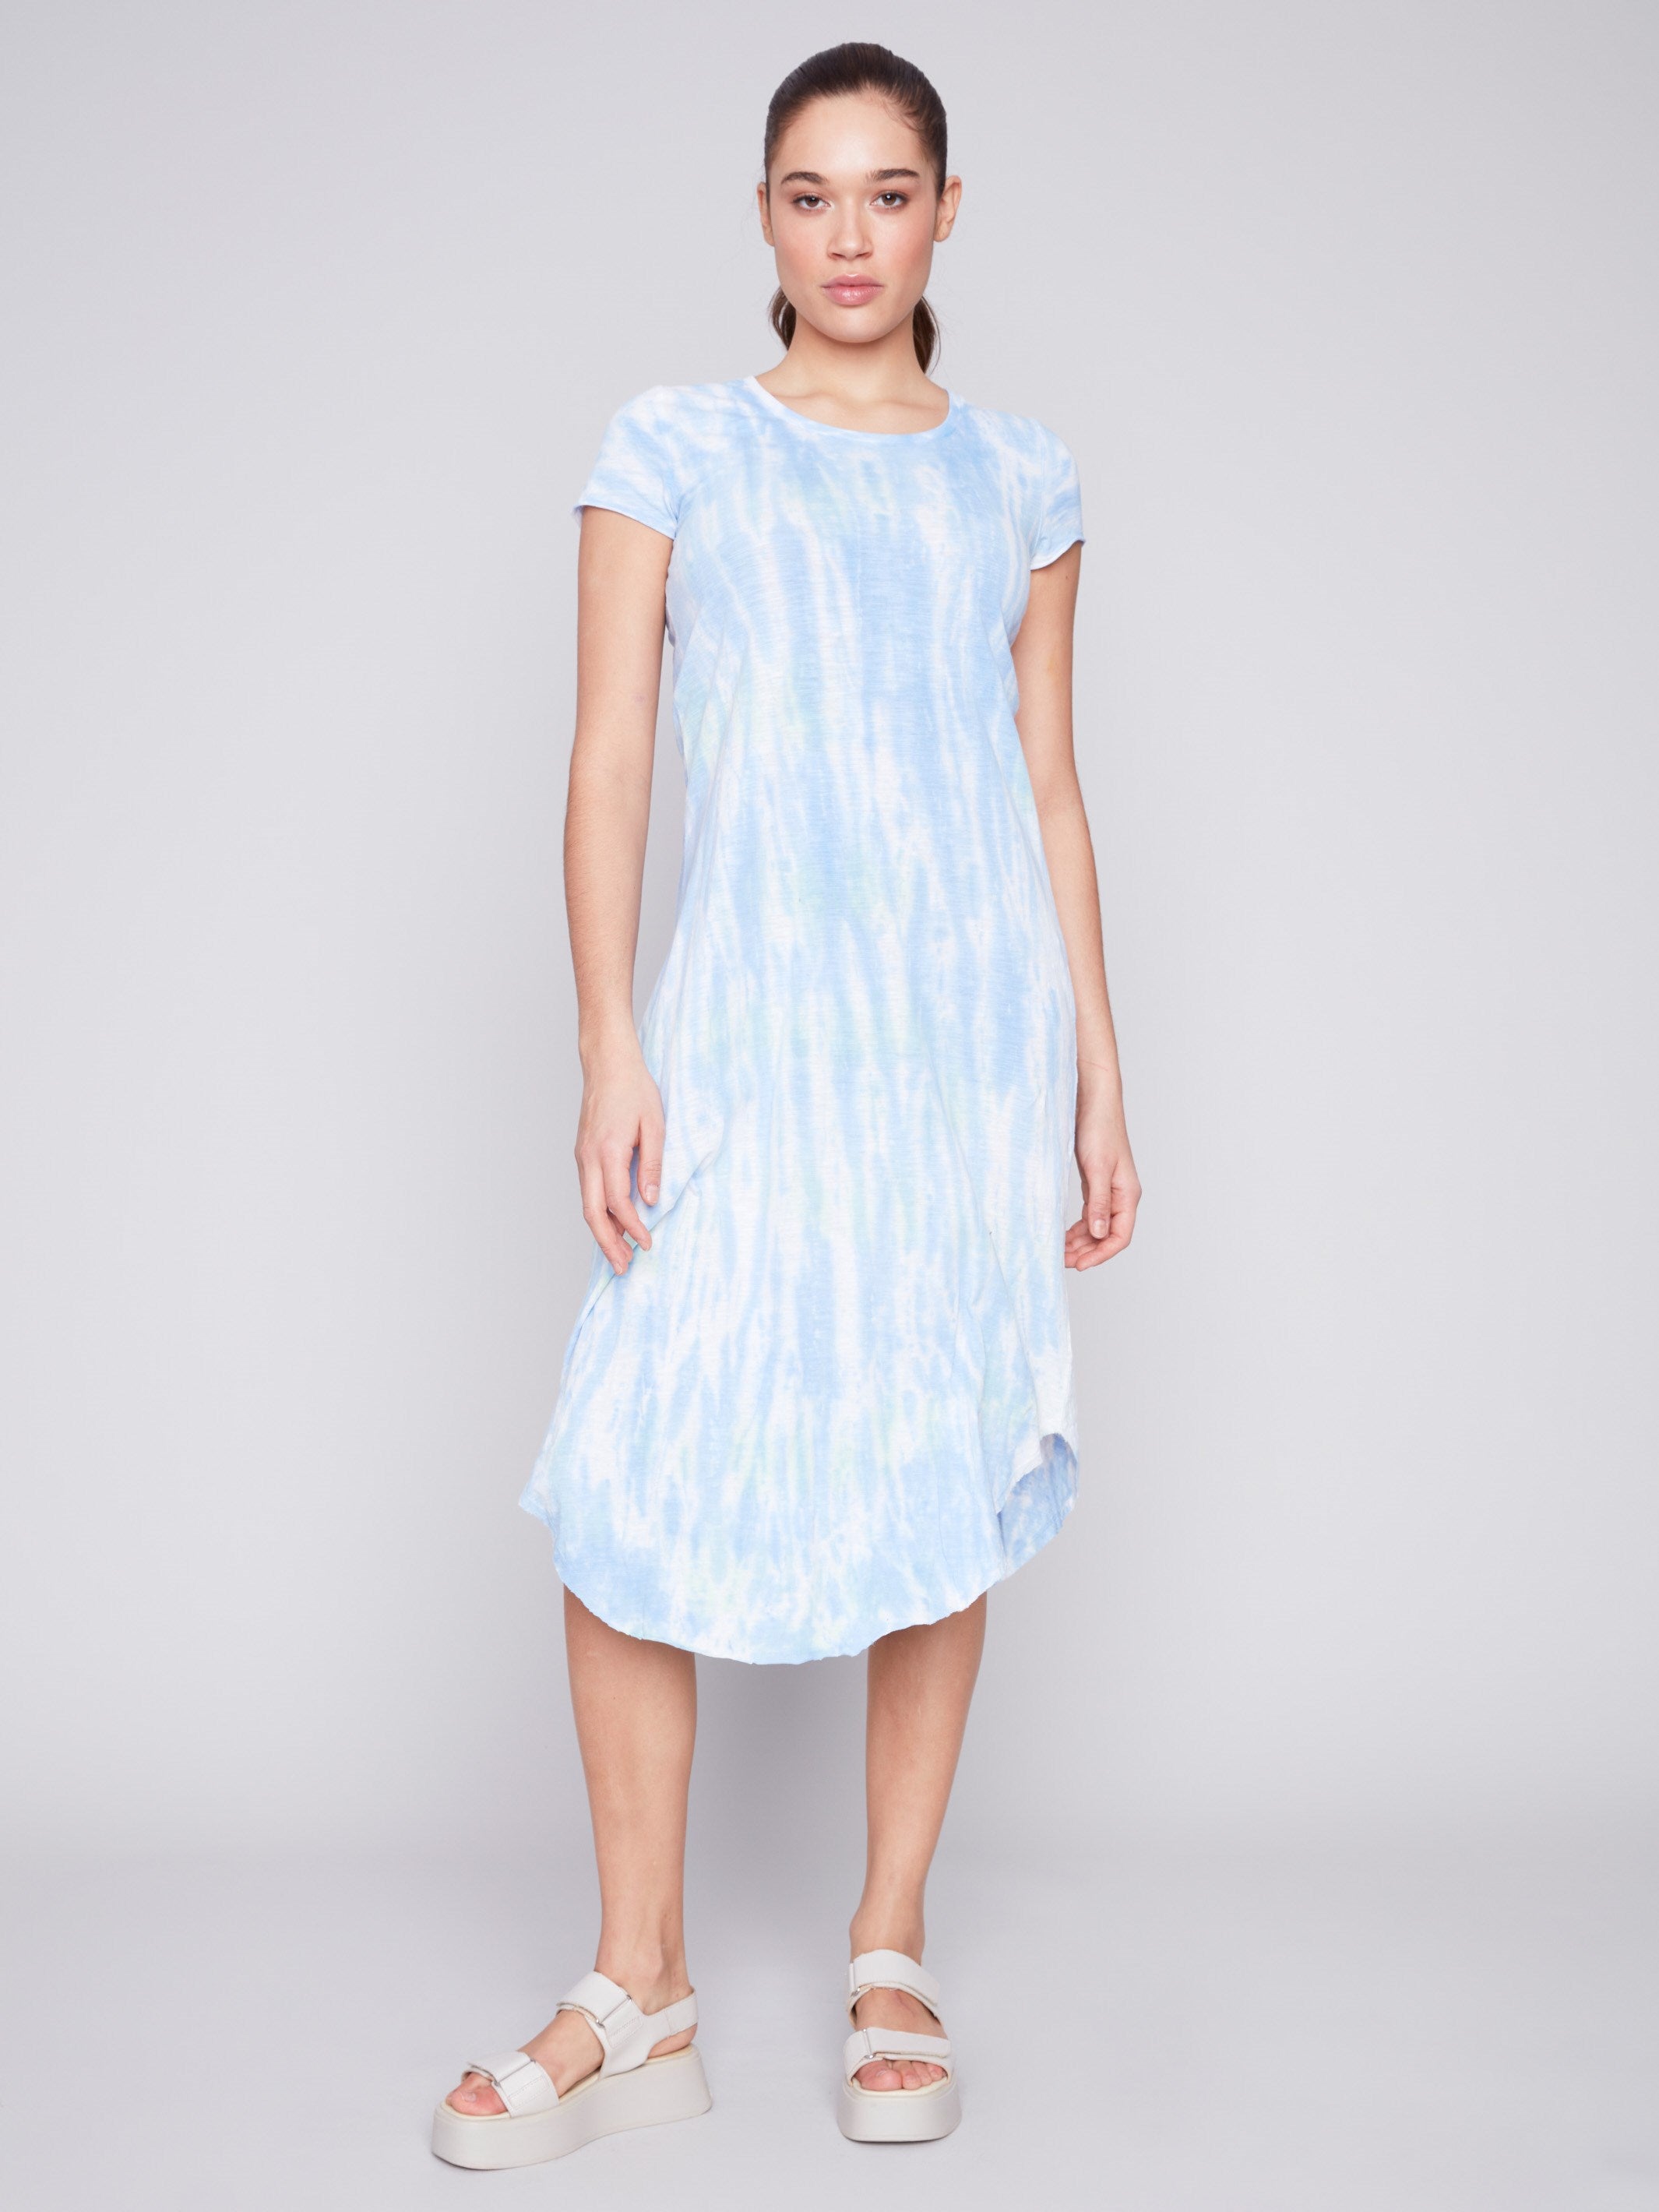 Tie-Dye Cotton Slub Dress - Amazon - Charlie B Collection Canada - Image 1